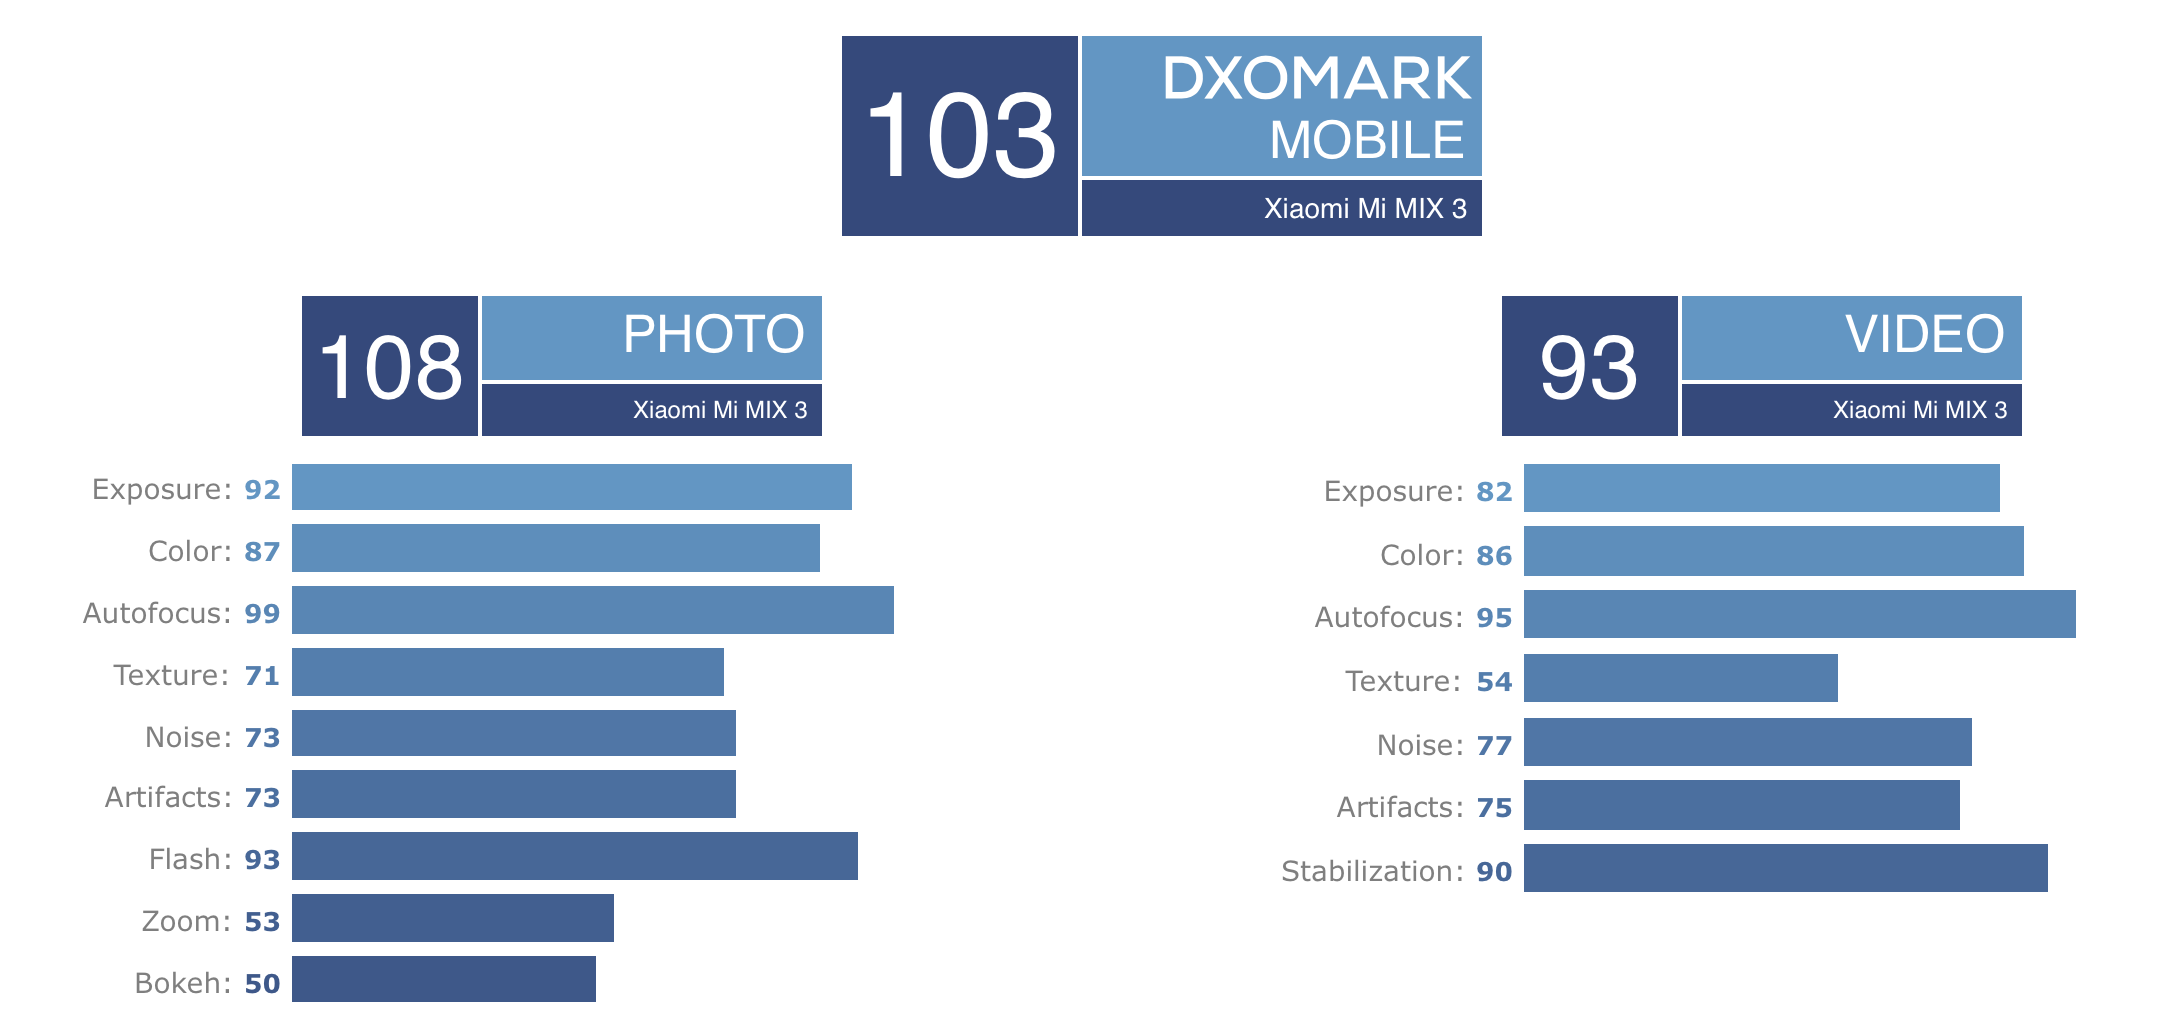 Dxomark 103分的小米MIX 3照相怎样？样本来定